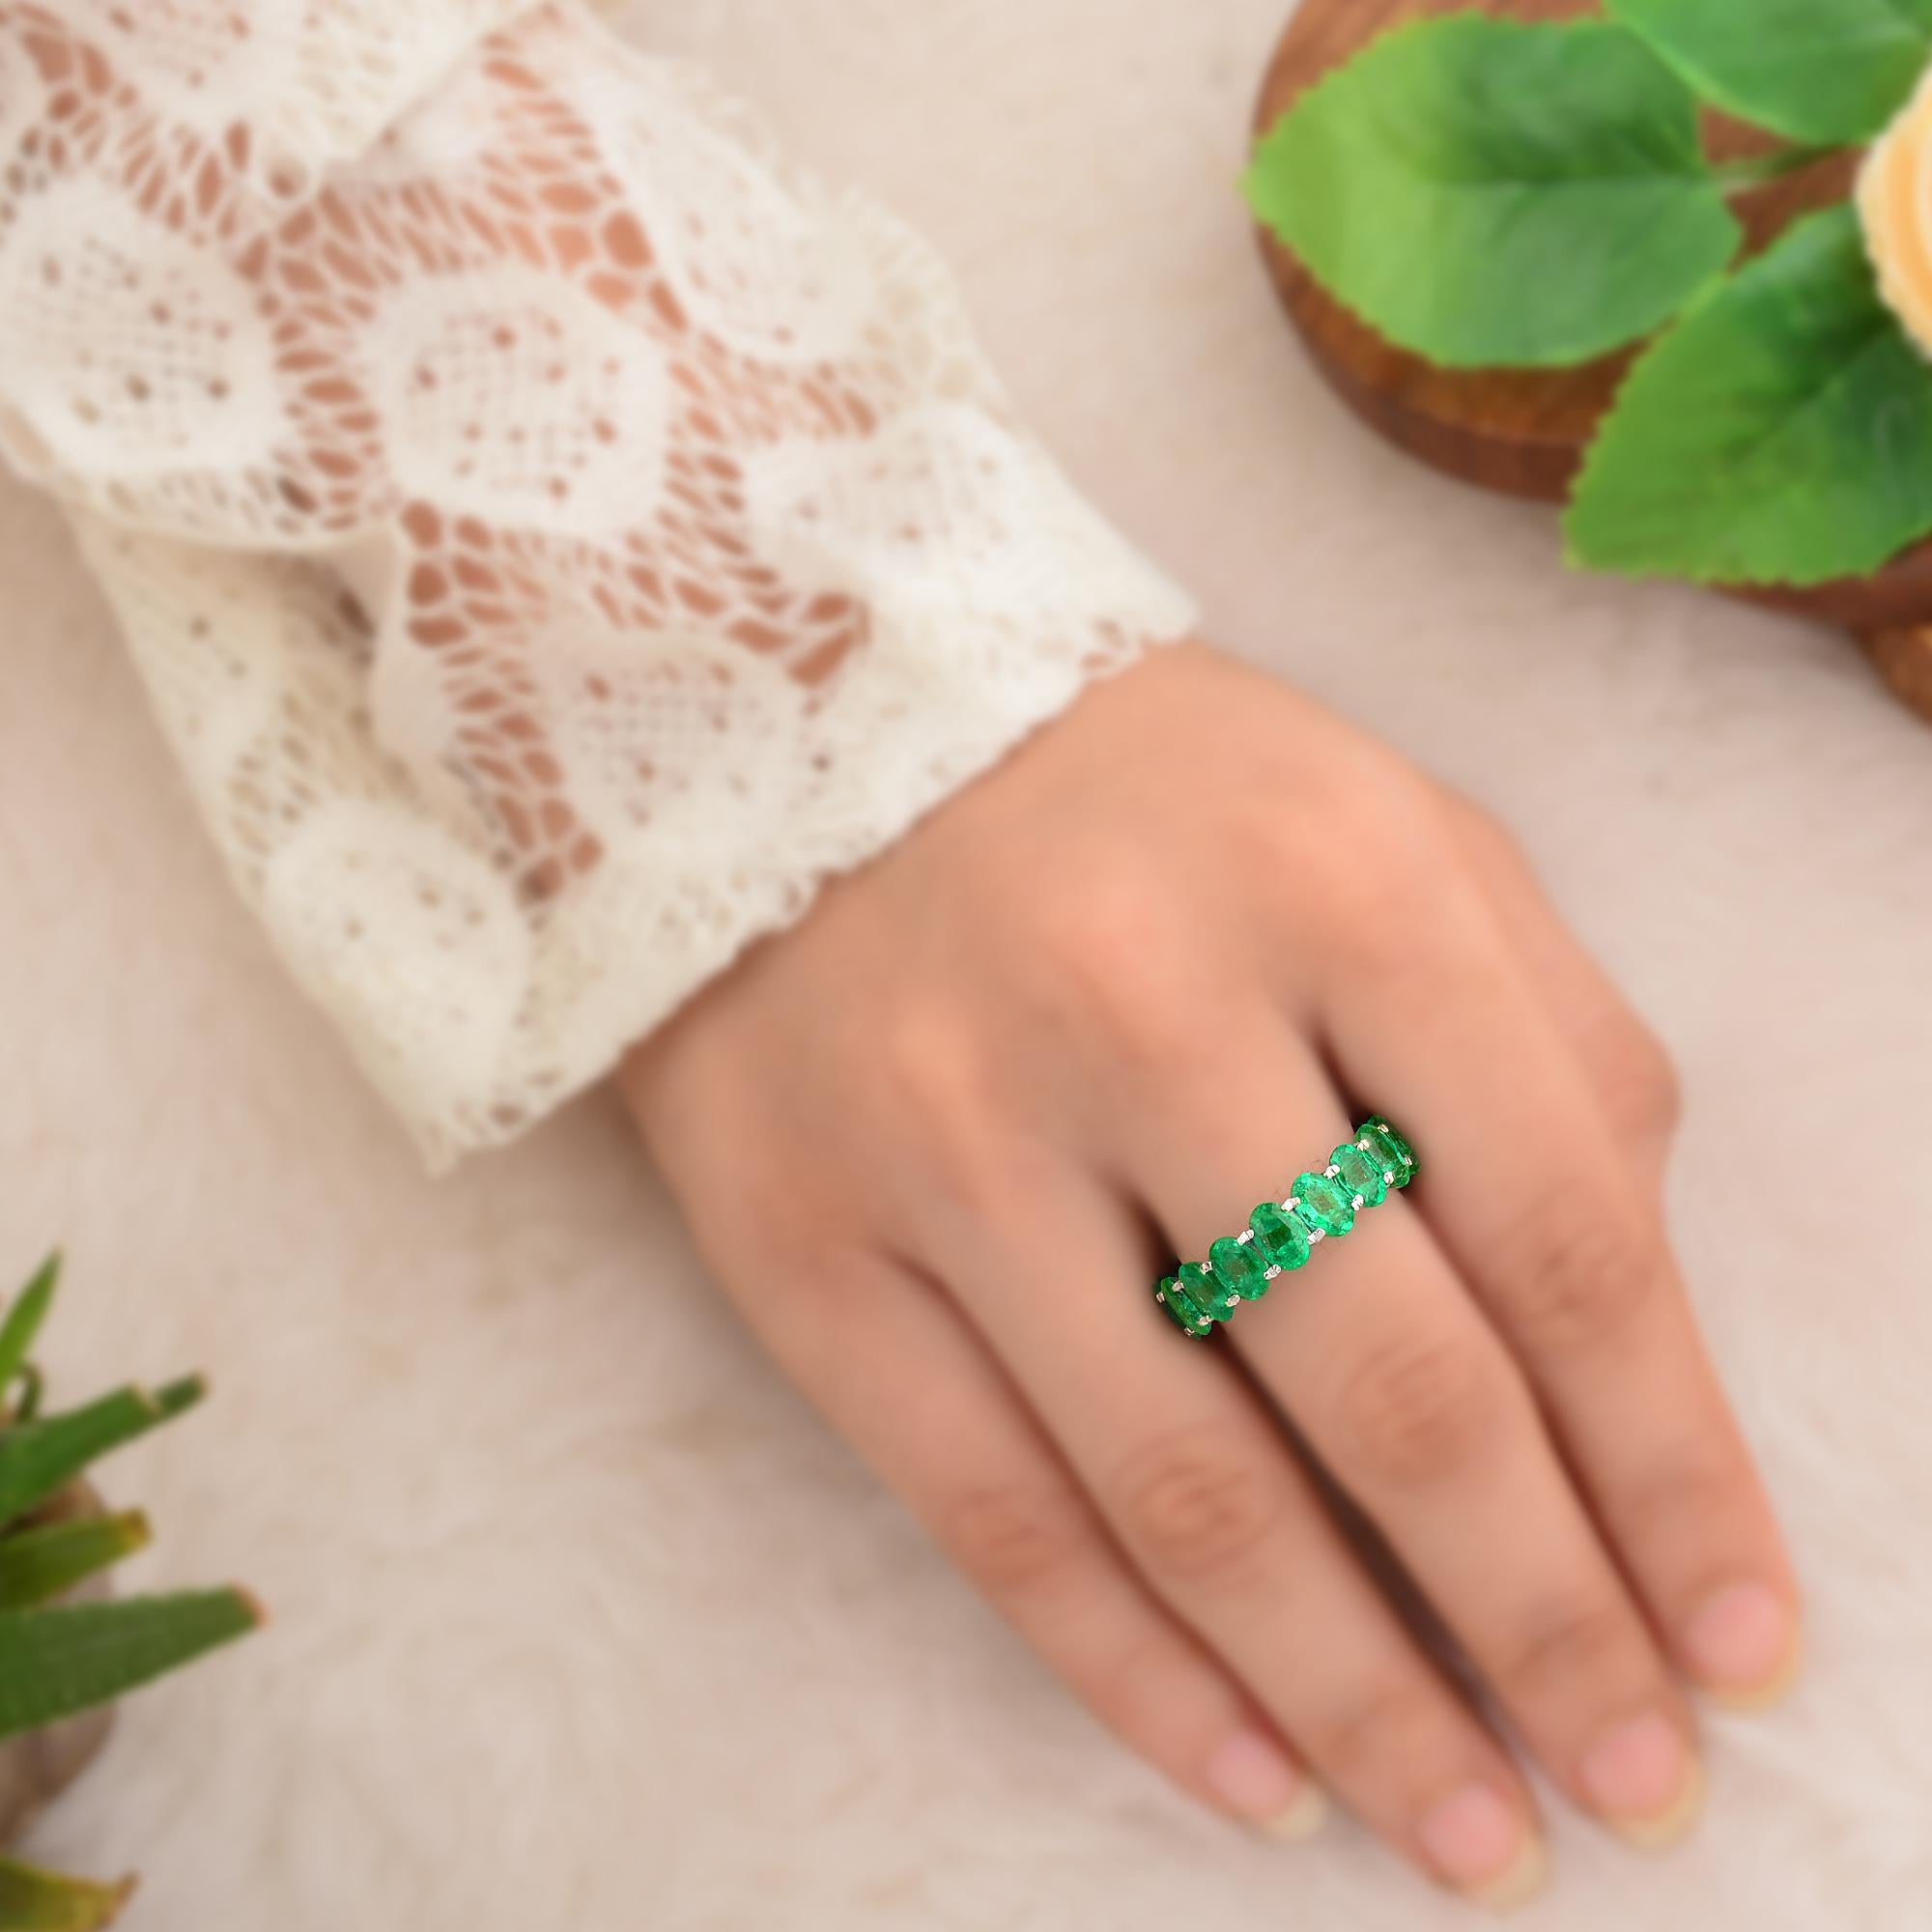 Oval Cut 4.40 Carat Zambian Emerald Gemstone Band Ring 18k White Gold Handmade Jewelry For Sale